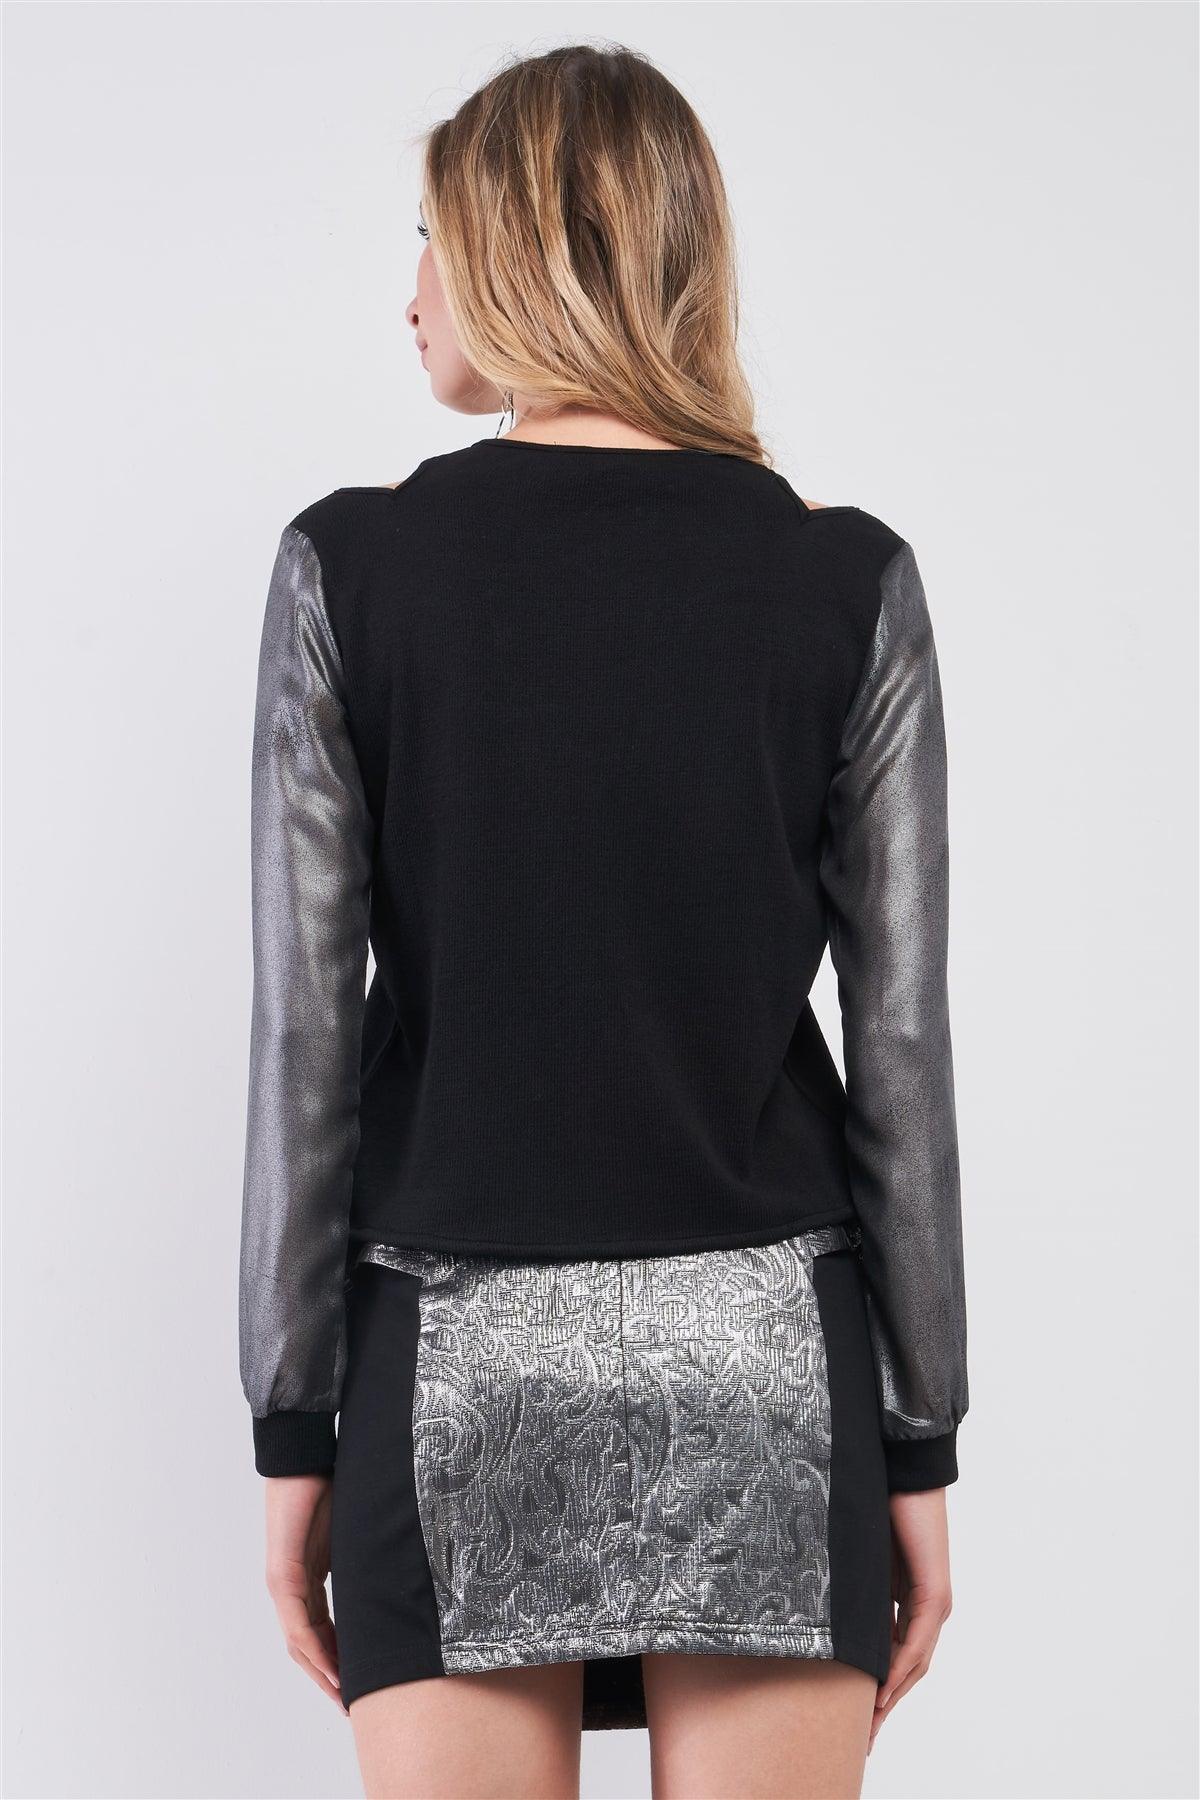 Black & Silver Combined Long Sleeve Asymmetrical Wrap Sweater Top /1-2-2-1